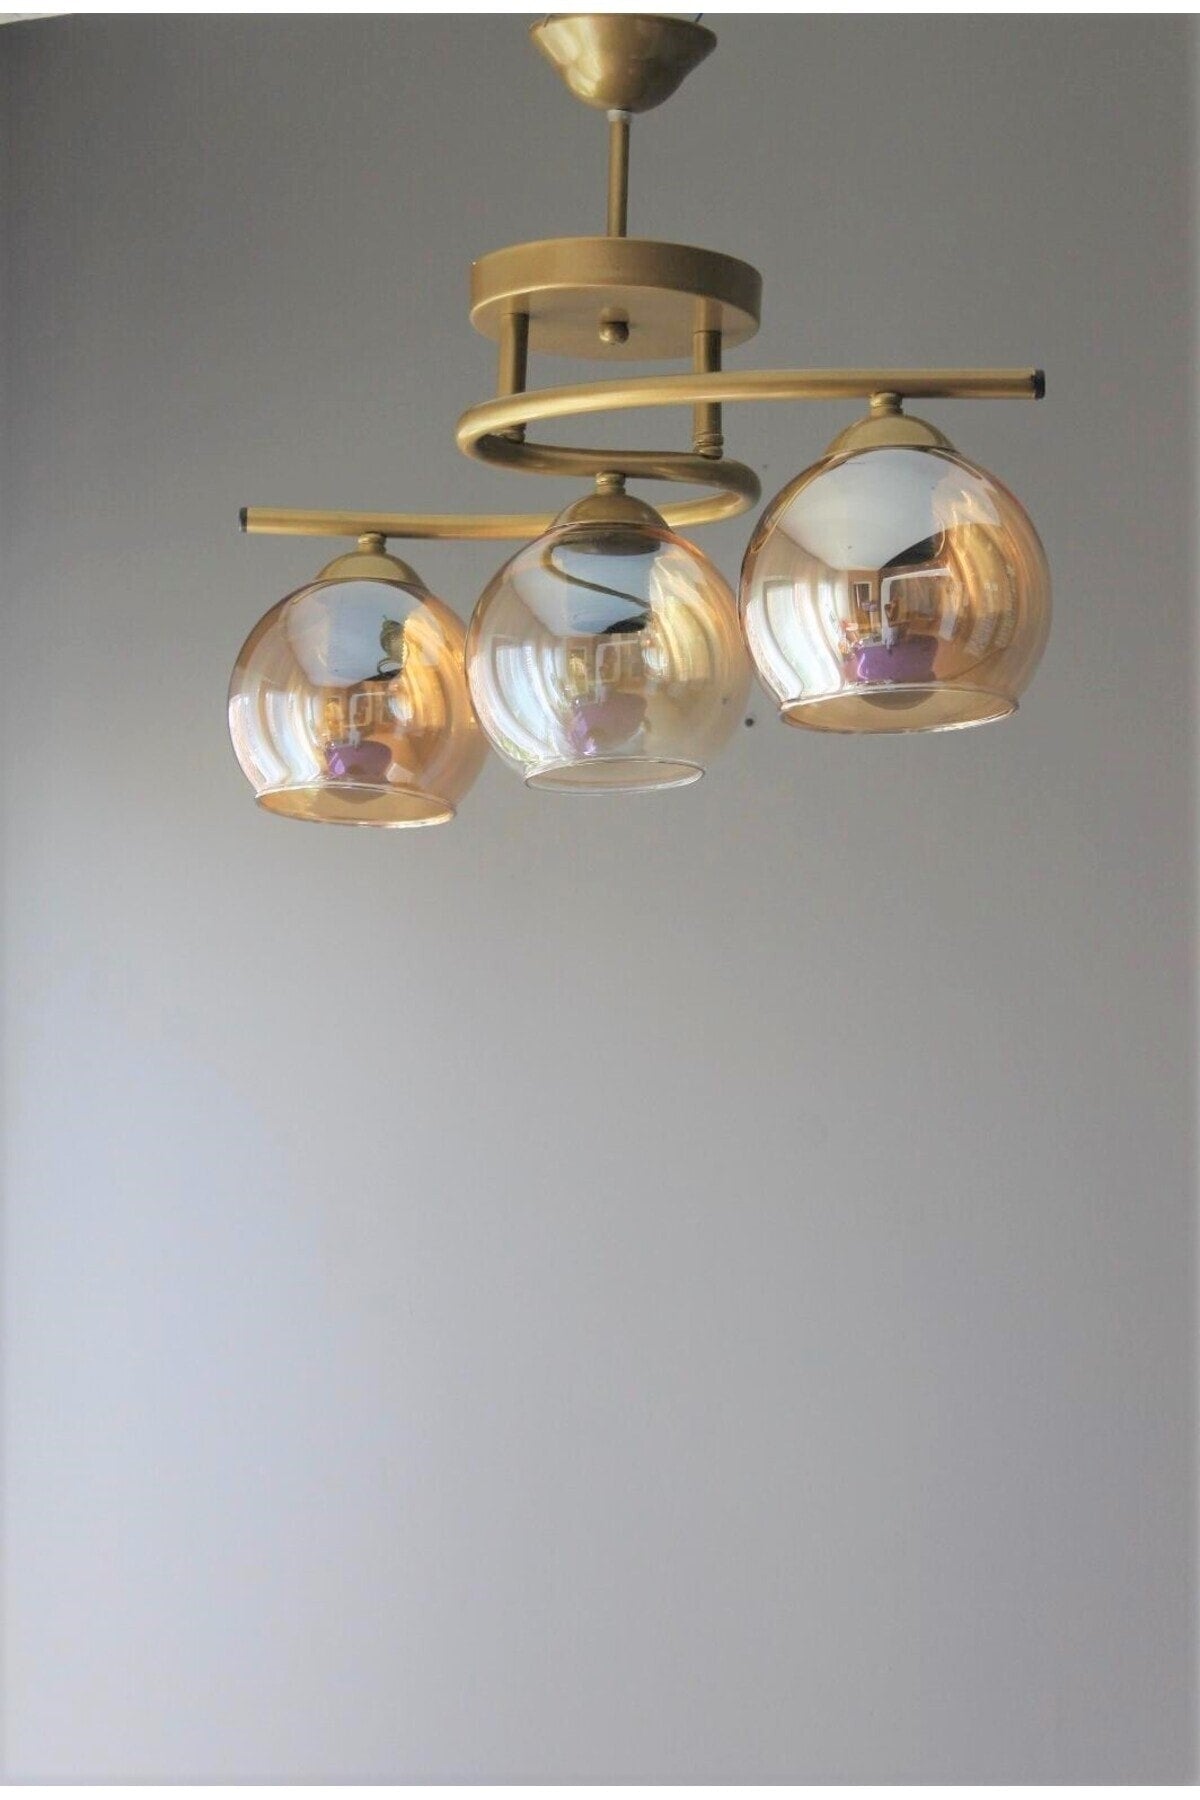 Lighting Antique Poyrazbal Glass Living Room 3-Piece Chandelier